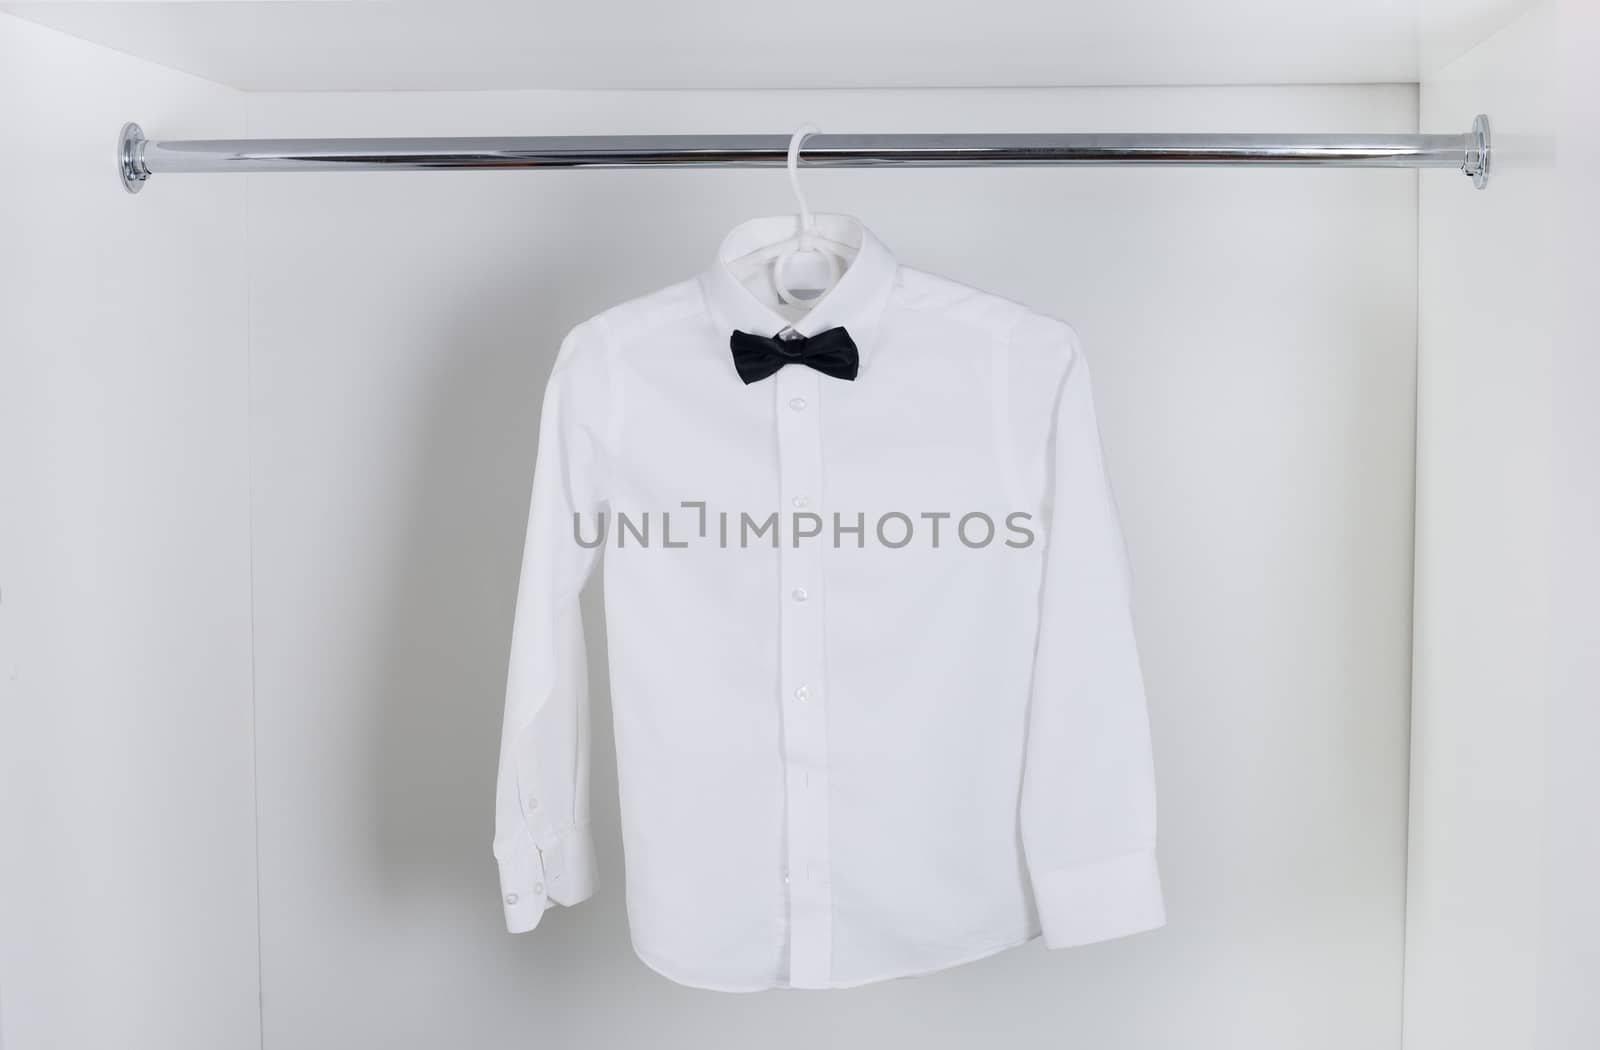 men's shirt with black bow tie by iprachenko